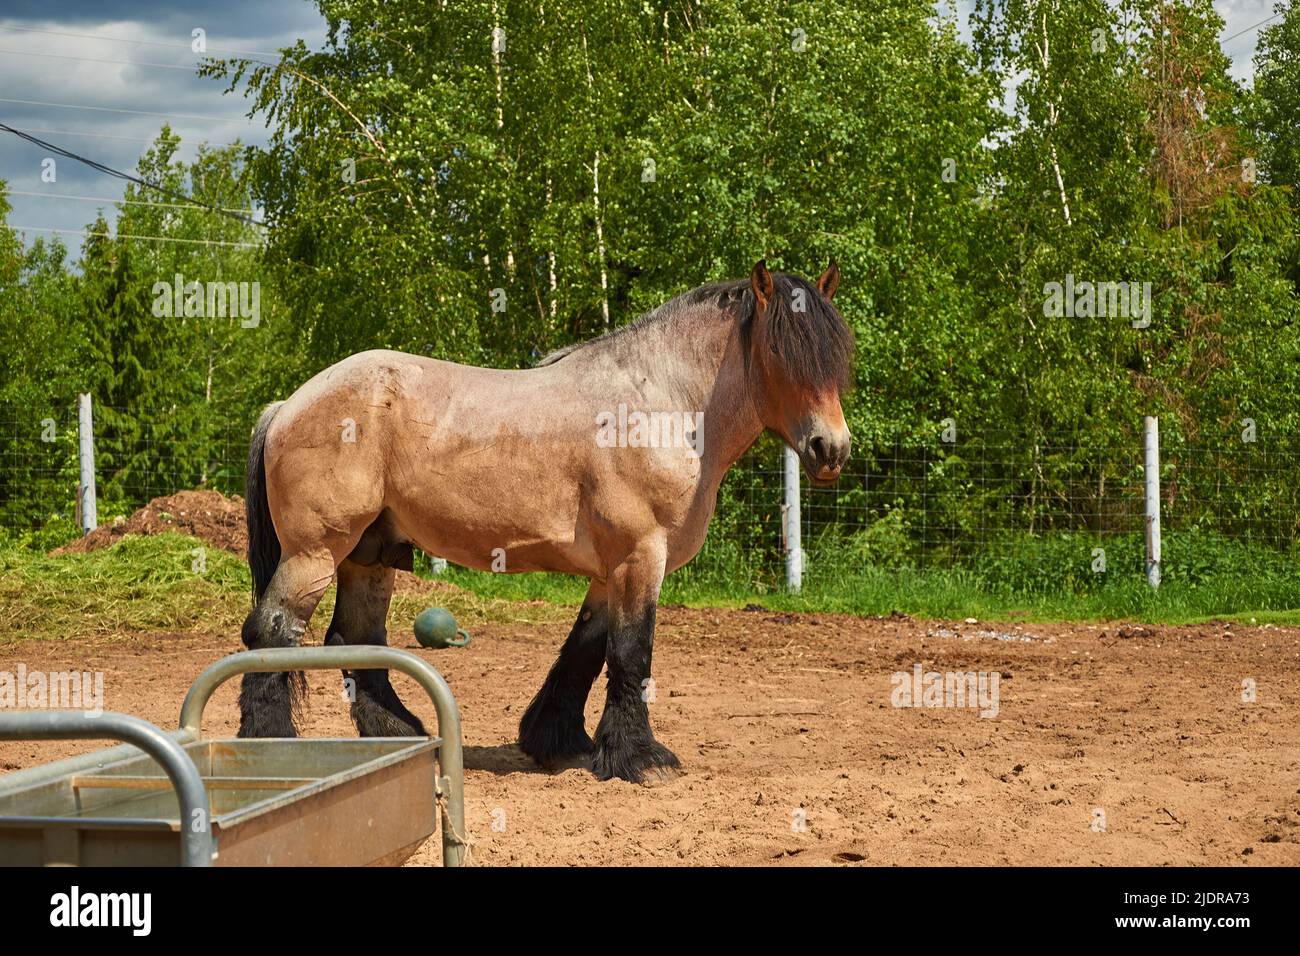 Brabanson, a Belgian heavy horse. Full-length portrait of a horse Stock Photo